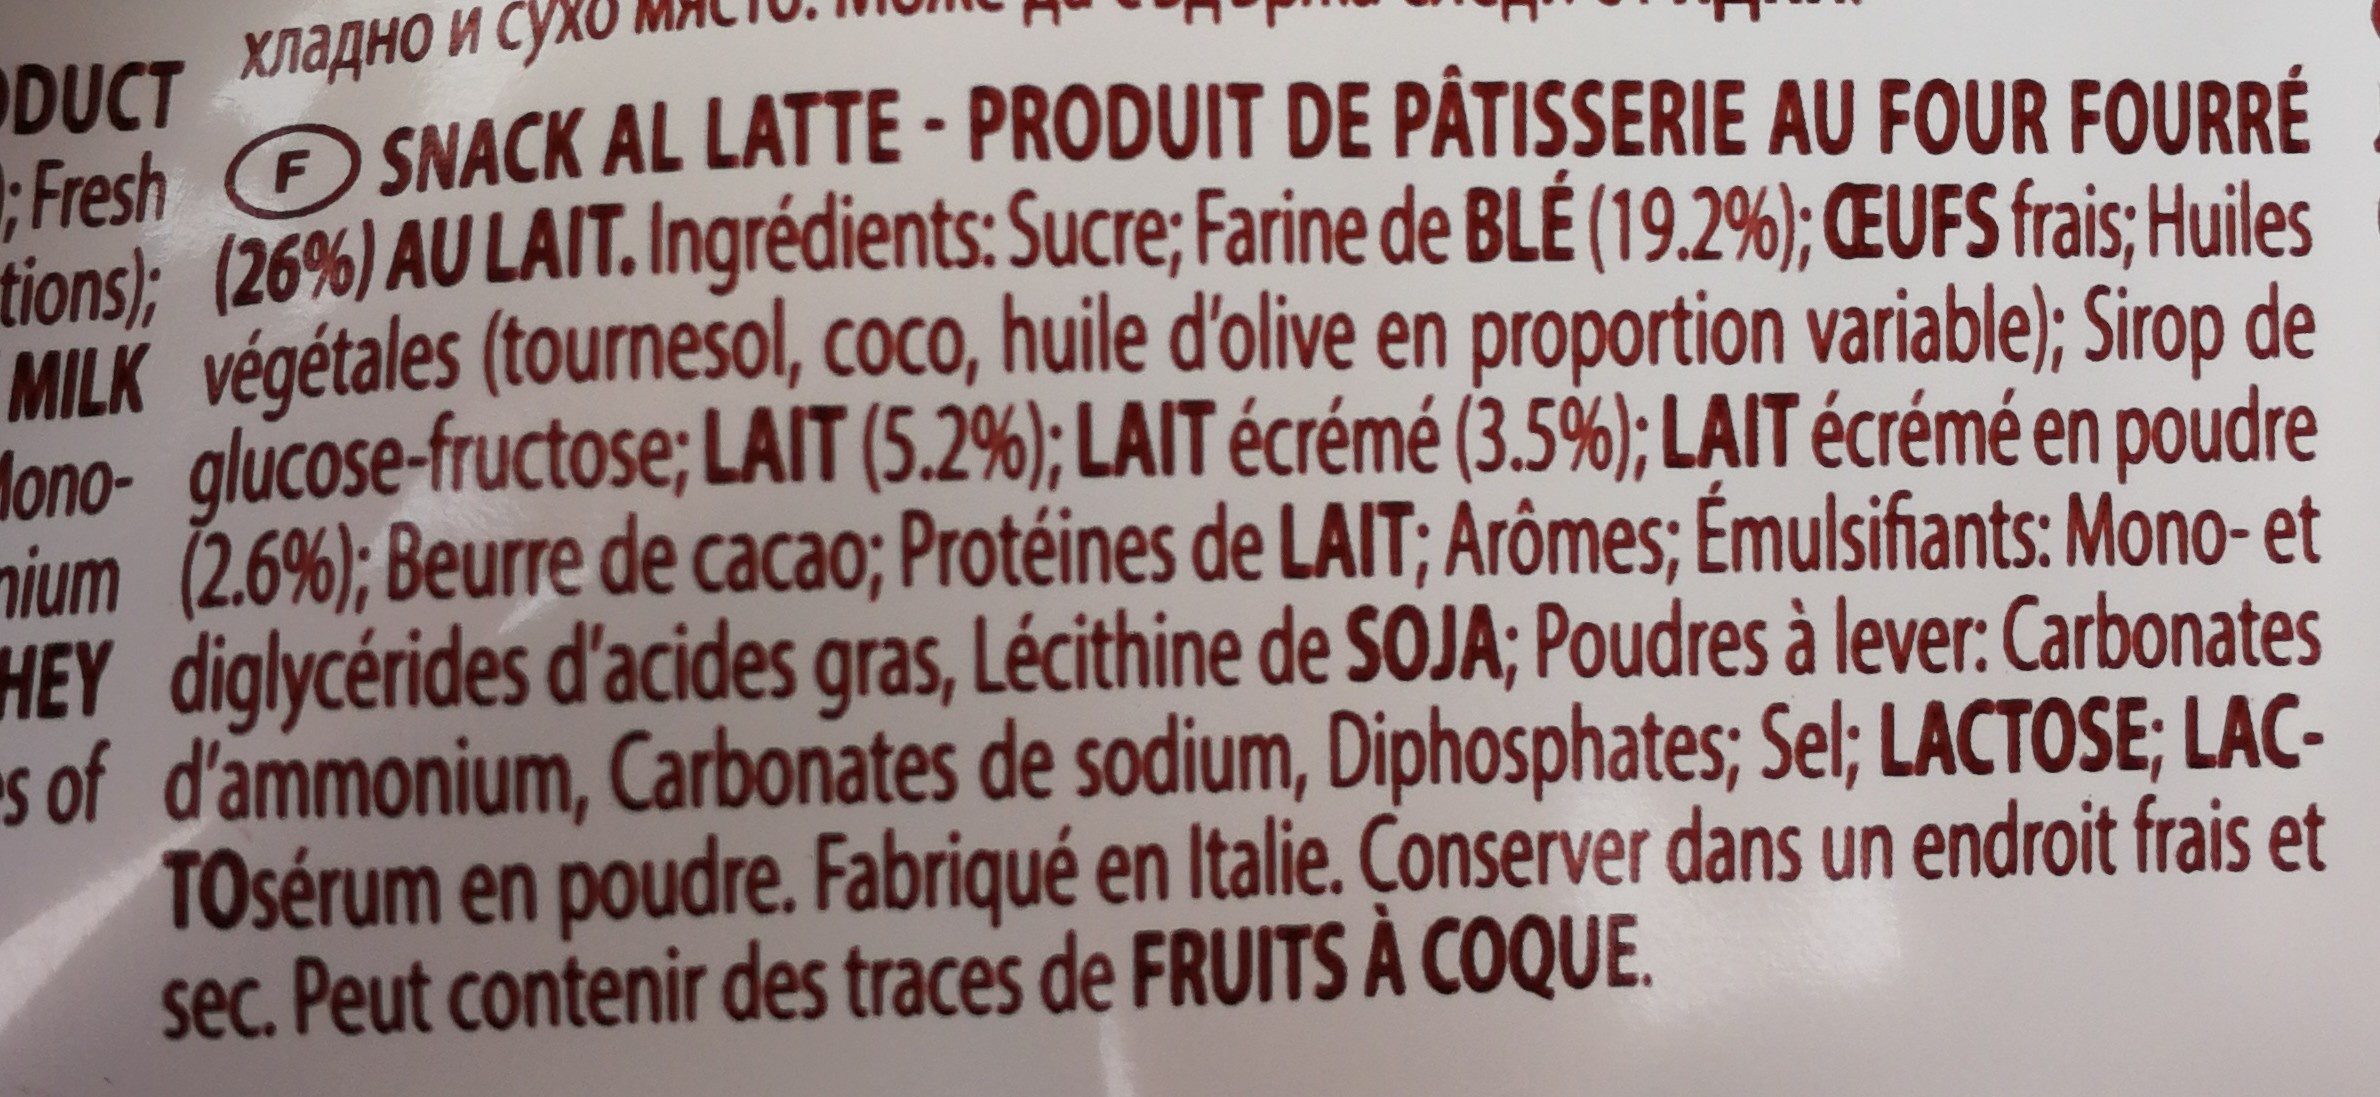 Snack Latte - Milk Cream Filling - Ingredientes - fr